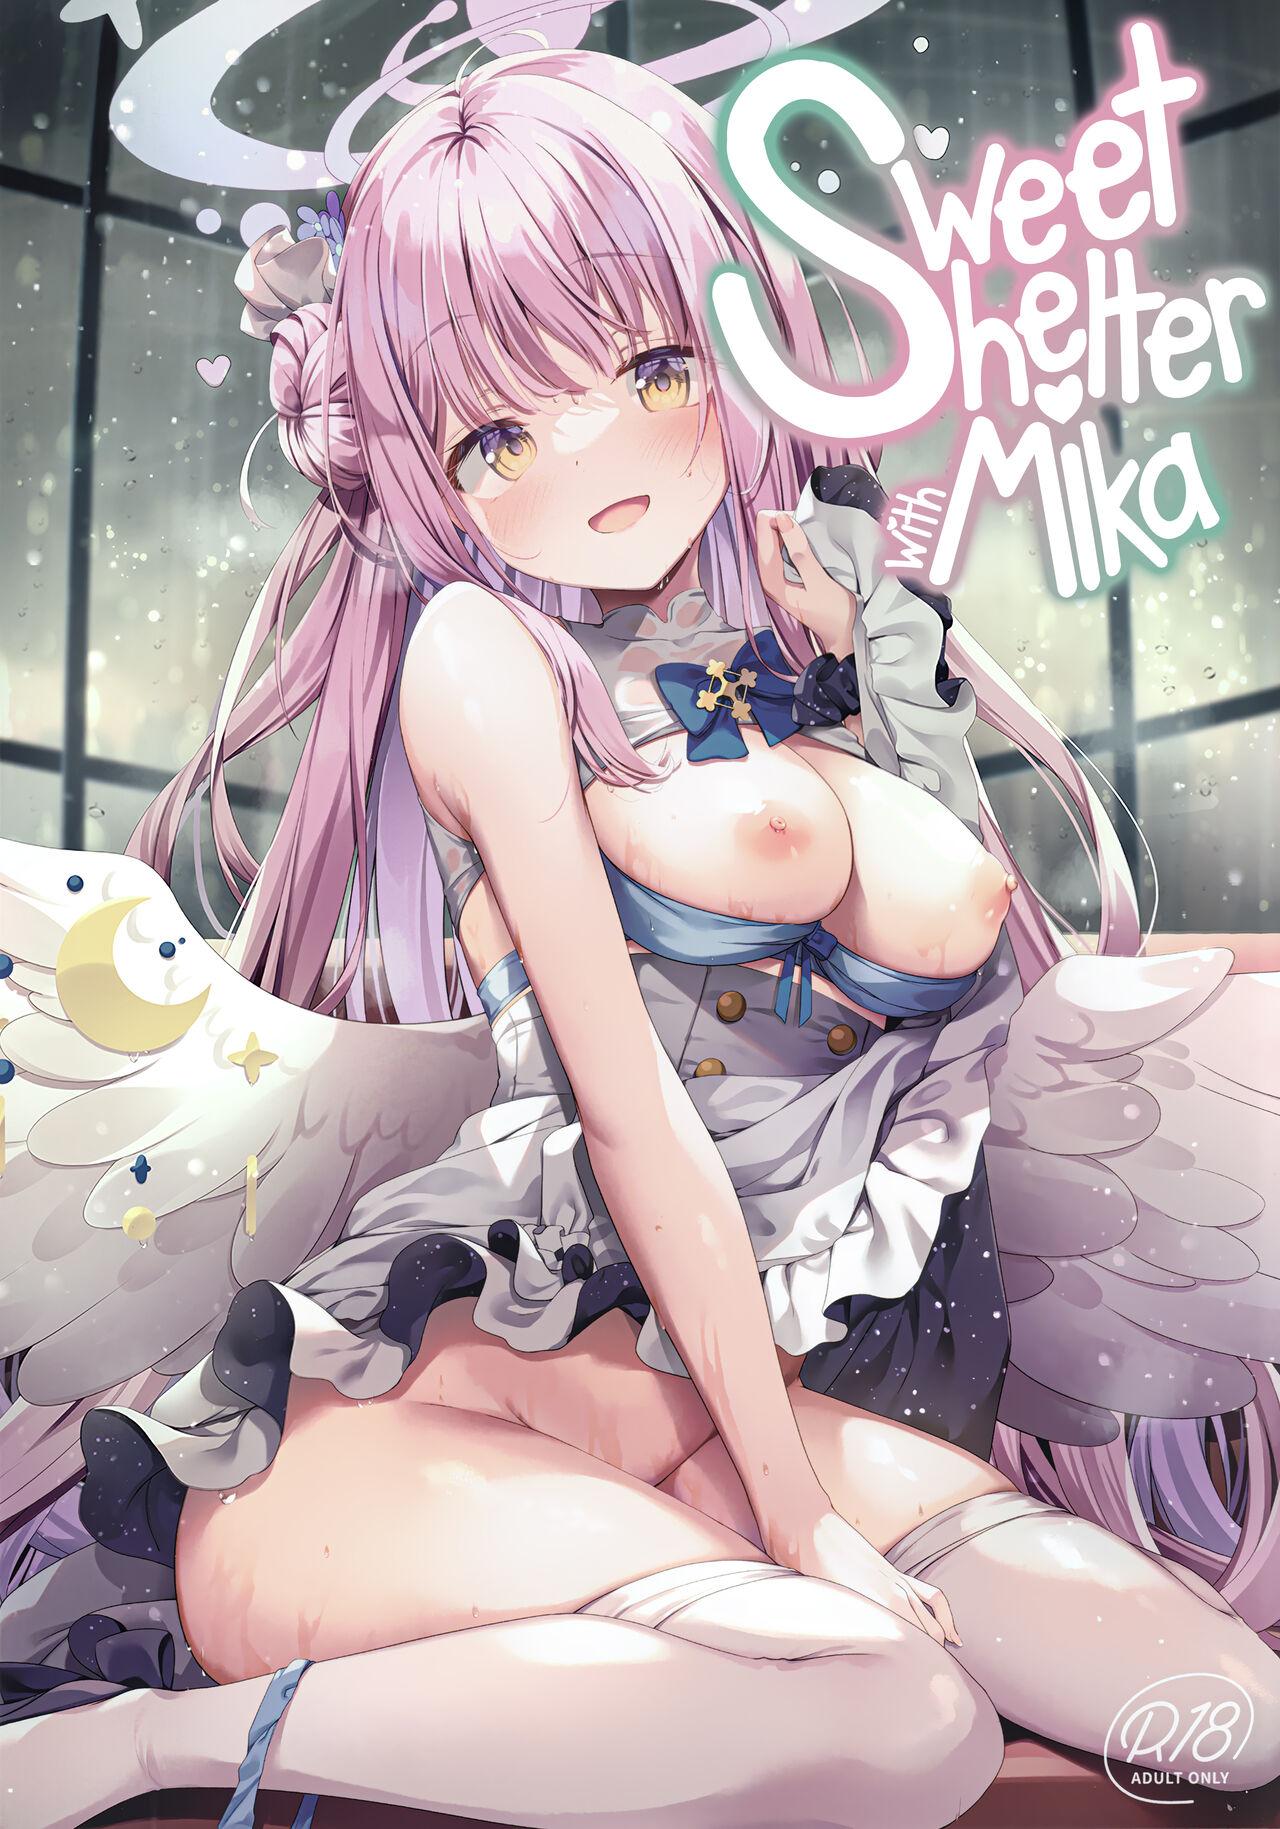 Mika to Amayadori | Sweet Shelter with Mika 0